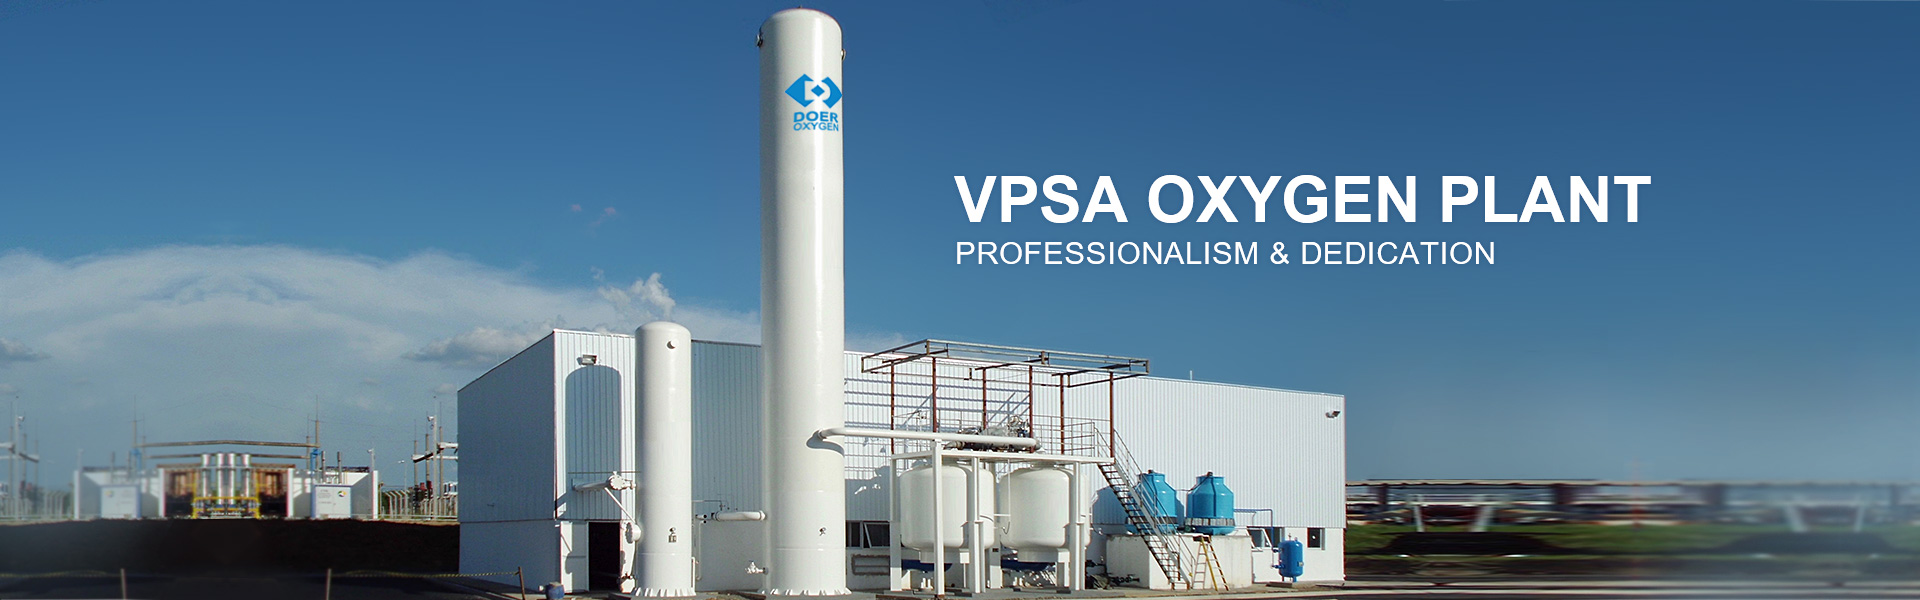 Atmospheric Cryogenic Storage Tank, VPSA Oxygen Plant, Microbulk Tank